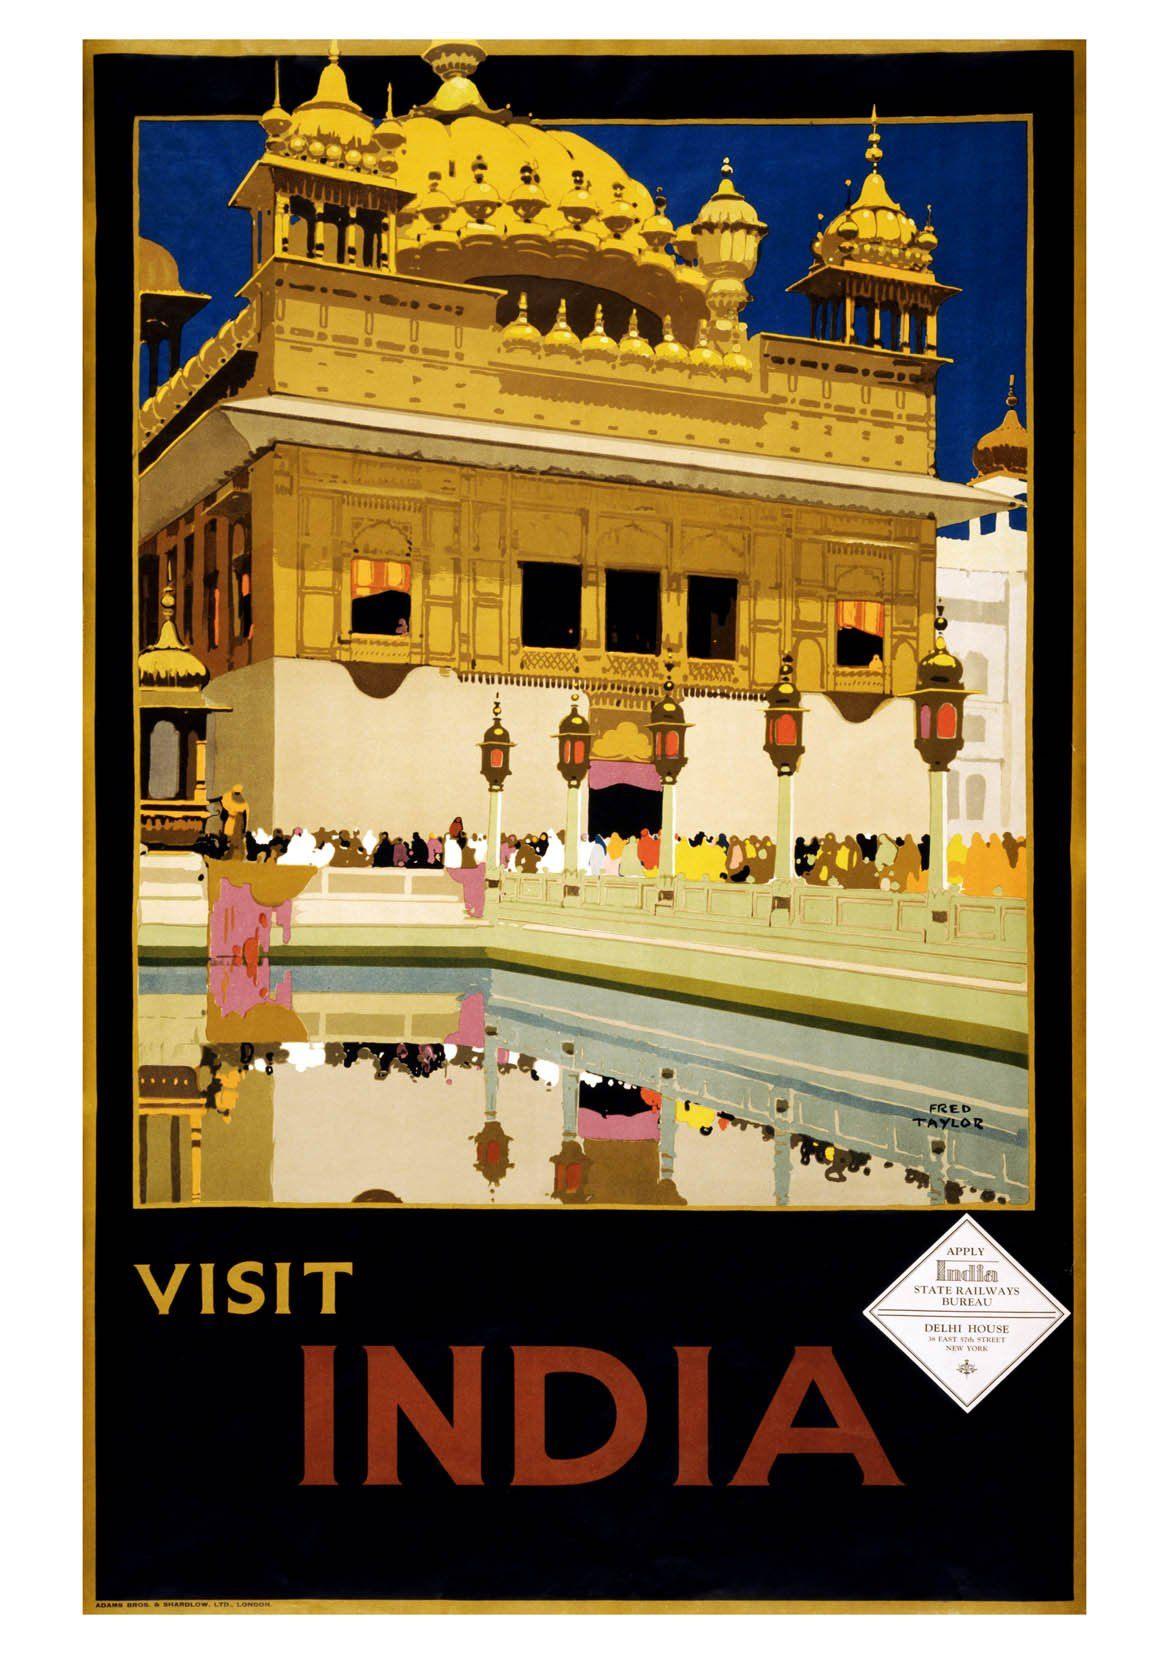 VISIT INDIA POSTER: Vintage Palace Travel Print - Pimlico Prints